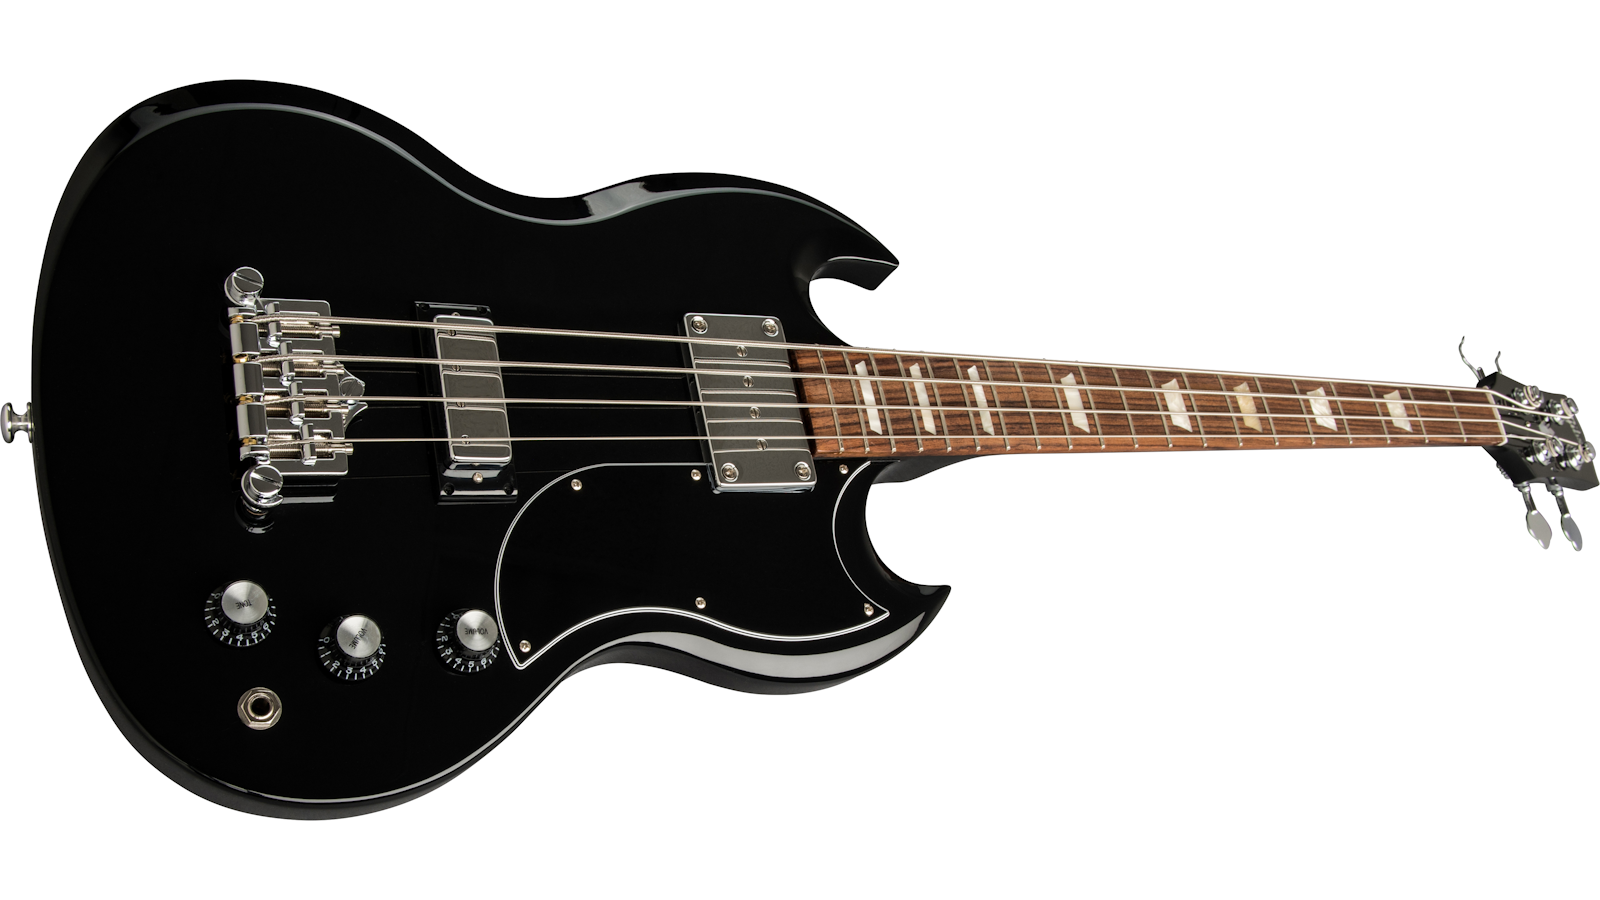 Басс стиль. Gibson SG Standard Bass Heritage Cherry.